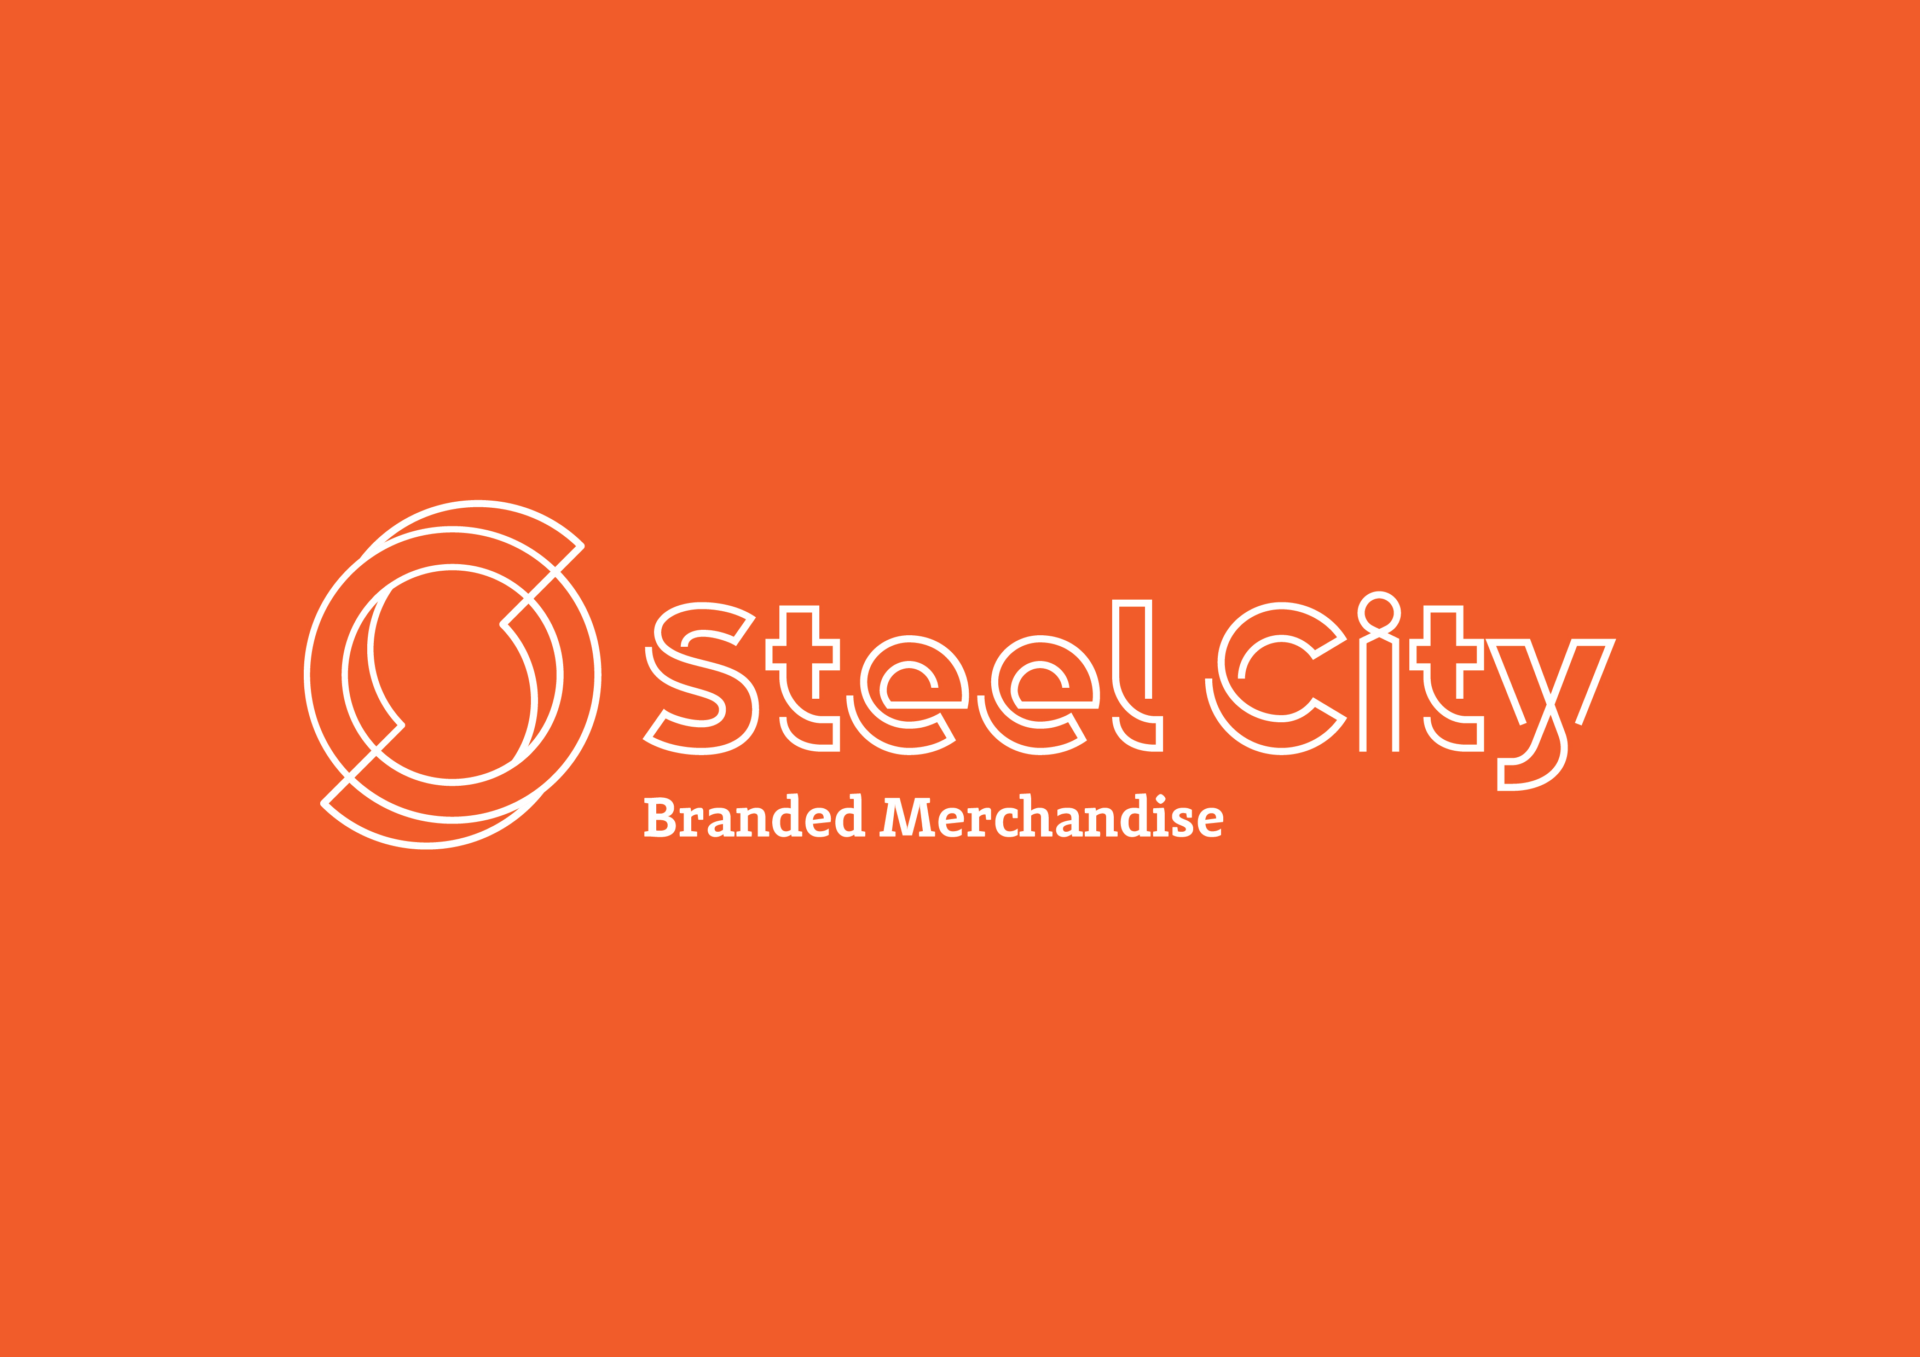 Steel City Marketing Ltd